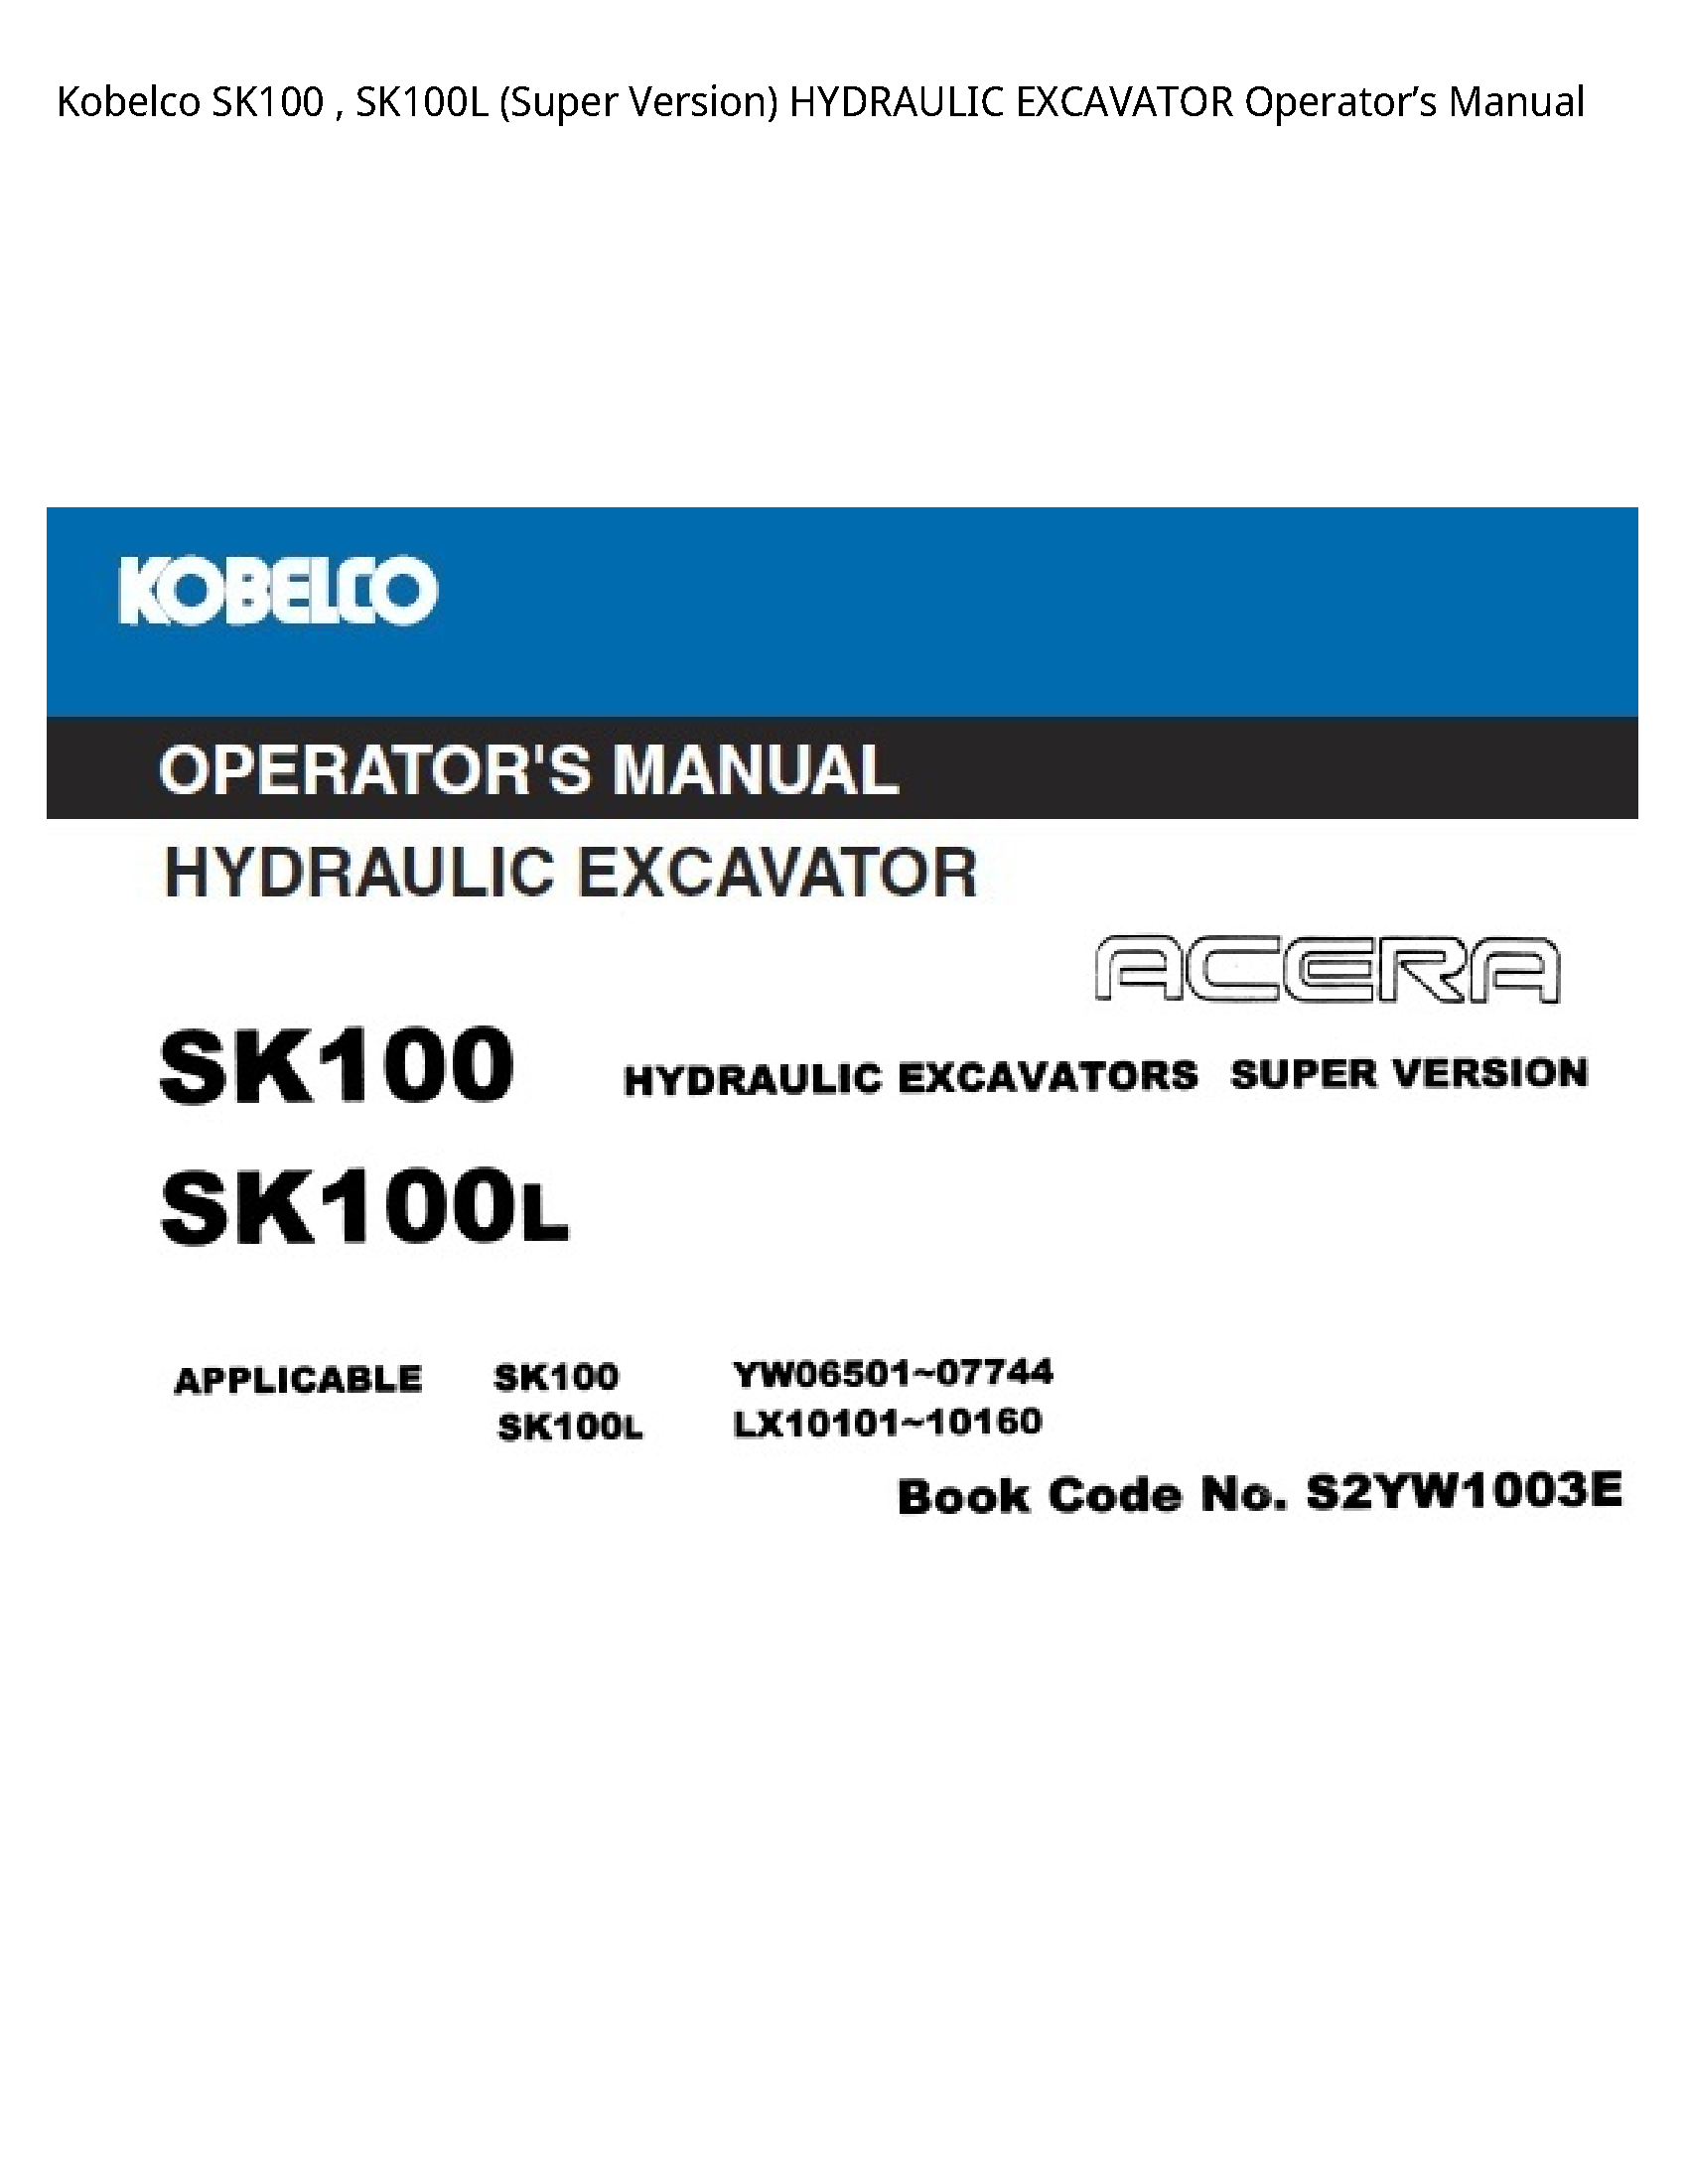 Kobelco SK100 (Super Version) HYDRAULIC EXCAVATOR Operator’s manual